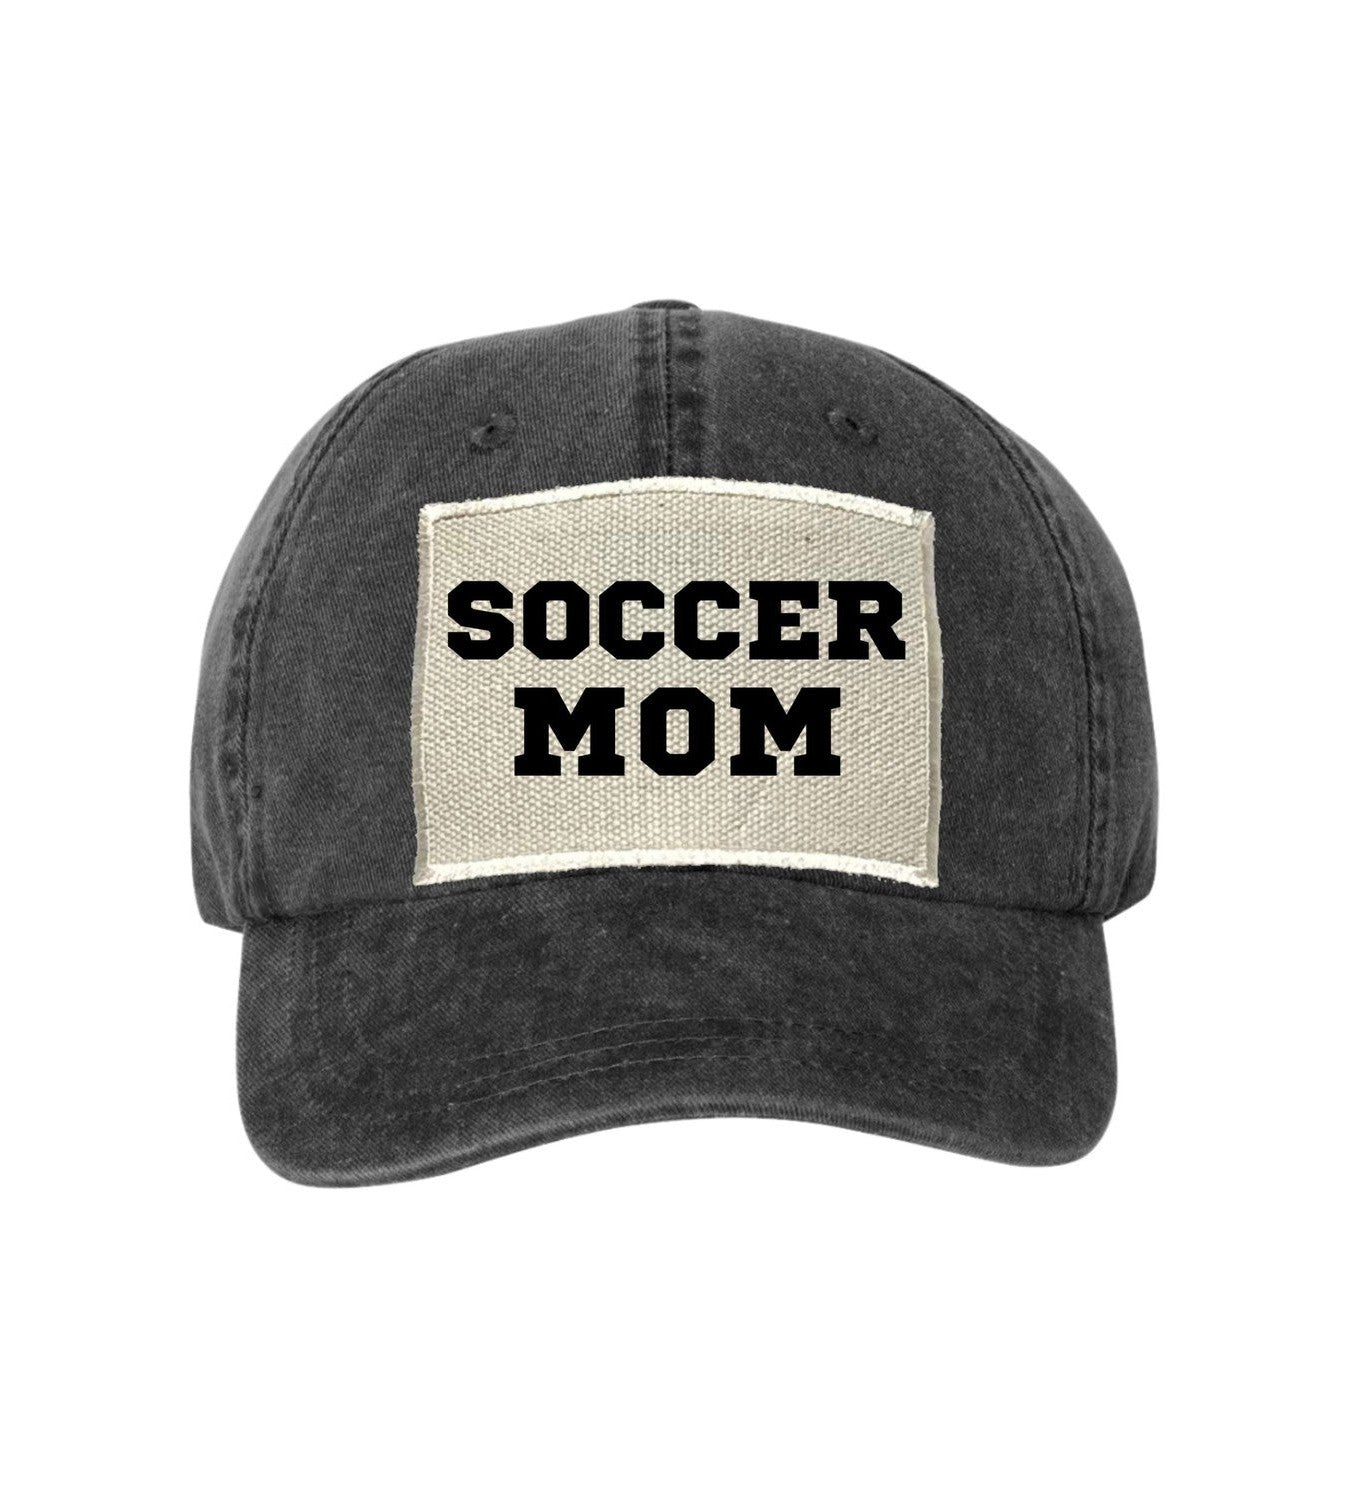 Soccer Mom Ball Cap